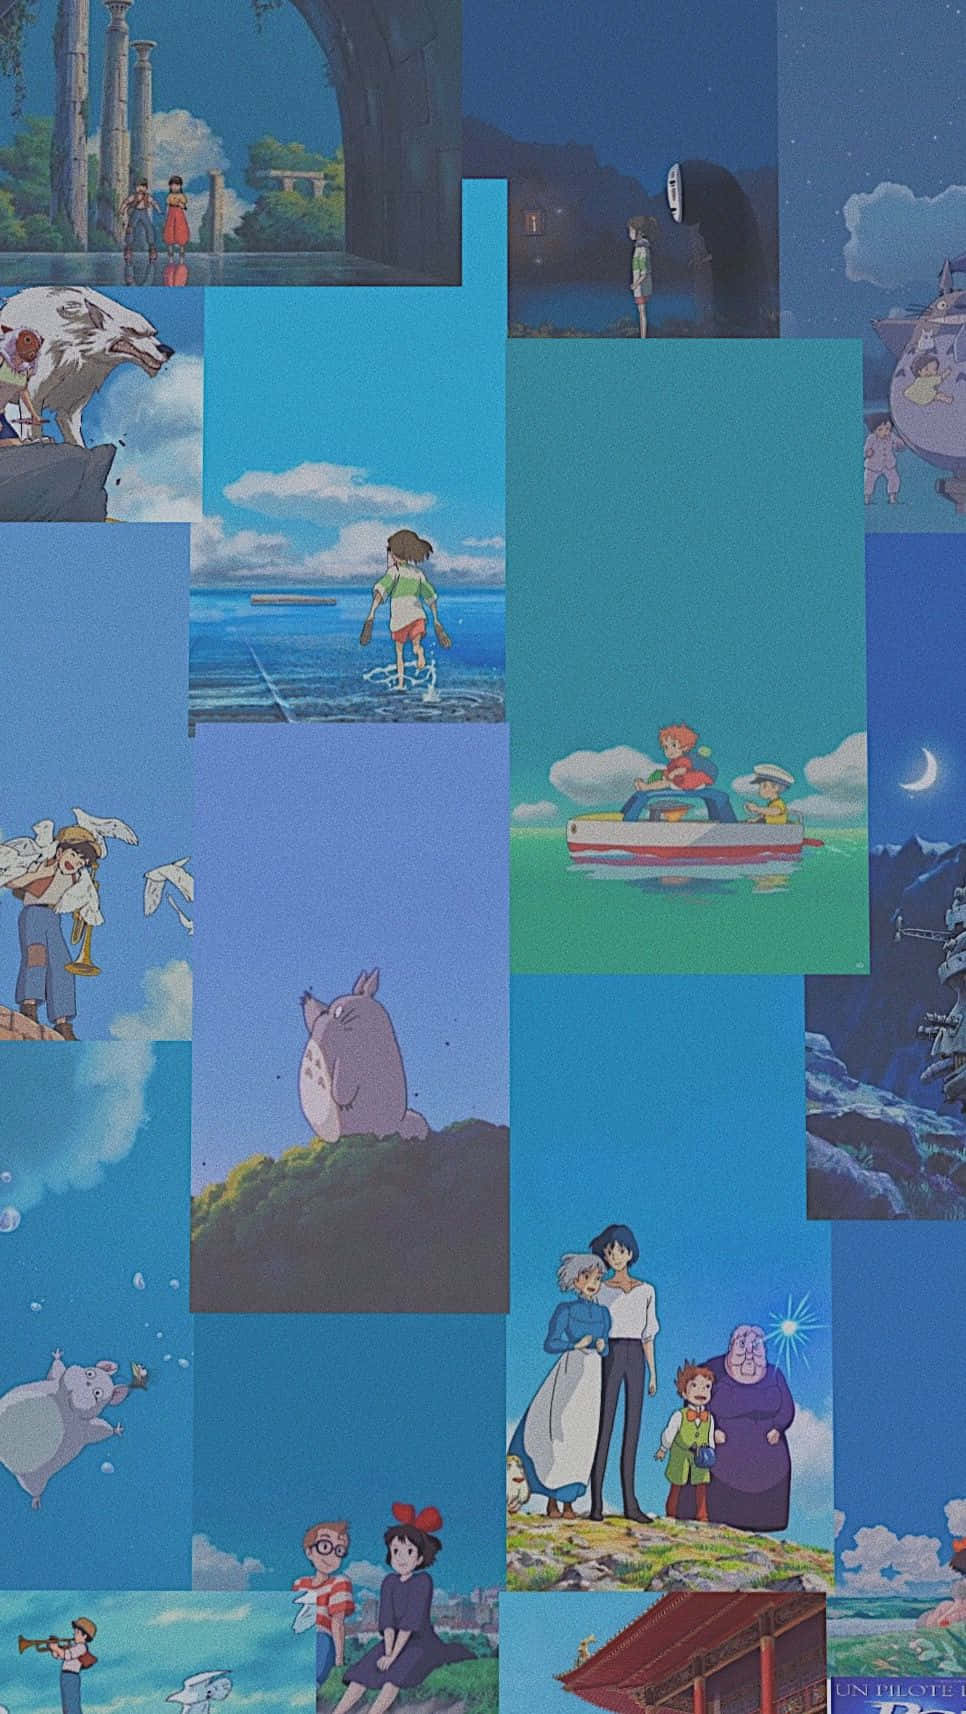 "Take a journey through the dreamy Aesthetic Ghibli universe" Wallpaper